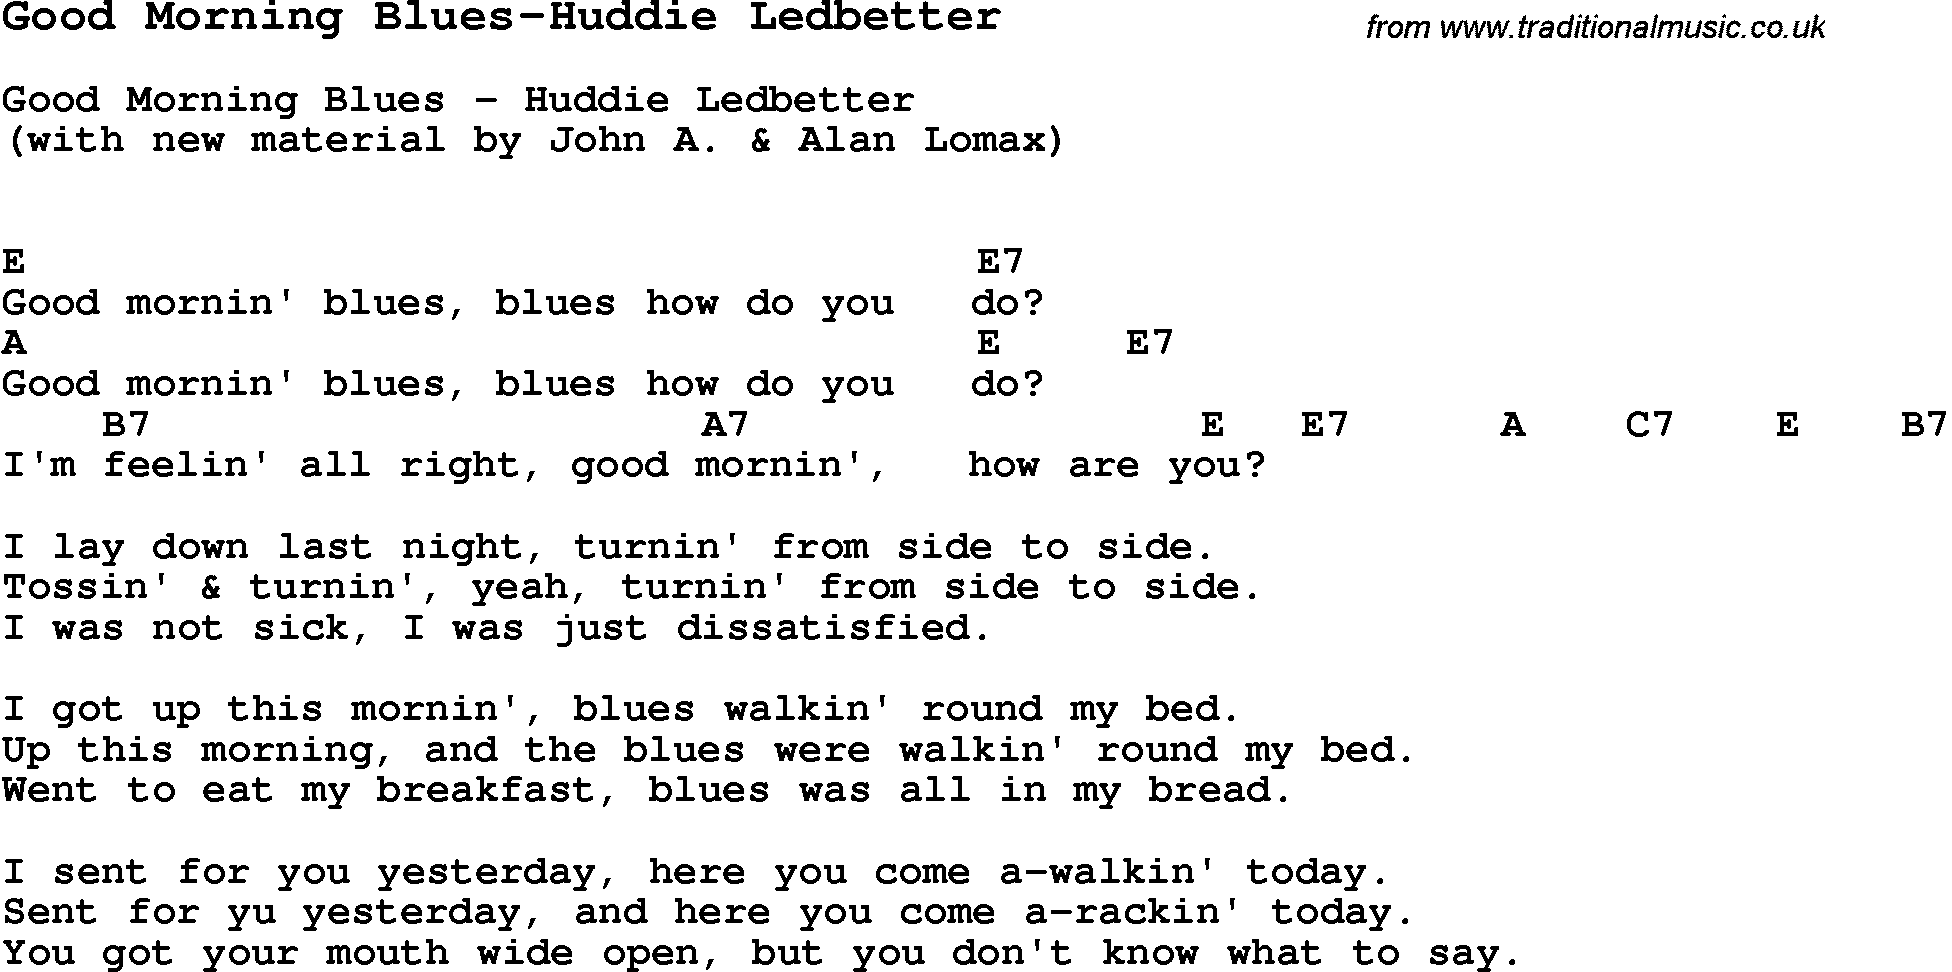 Blues Guitar Song, lyrics, chords, tablature, playing hints for Good Morning Blues-Huddie Ledbetter